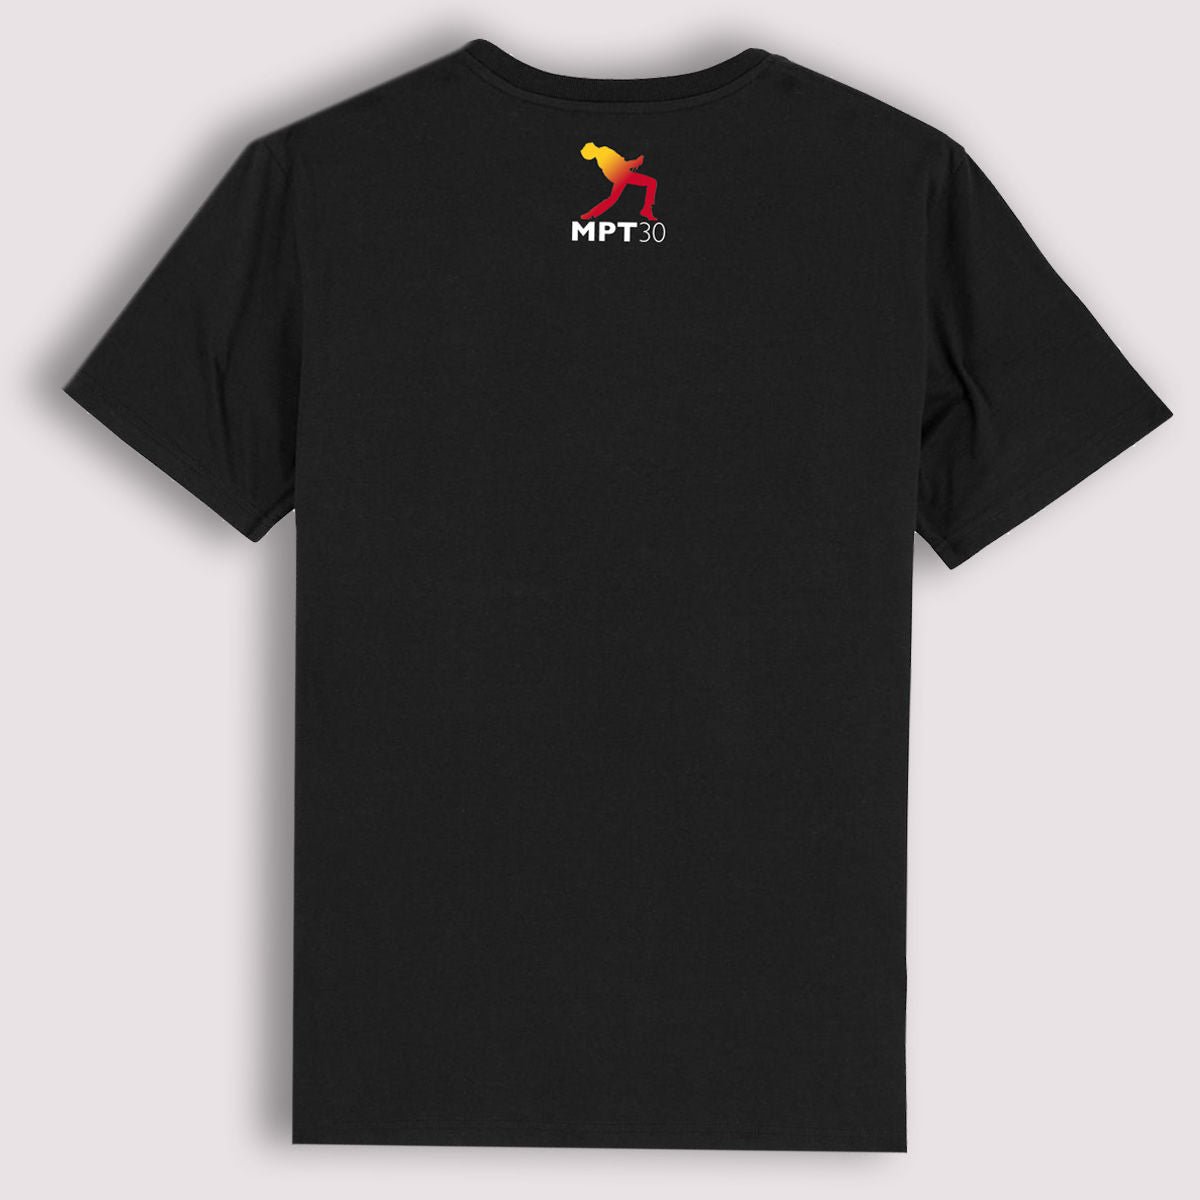 freddie for a day - Mercury Phoenix Black T-shirt